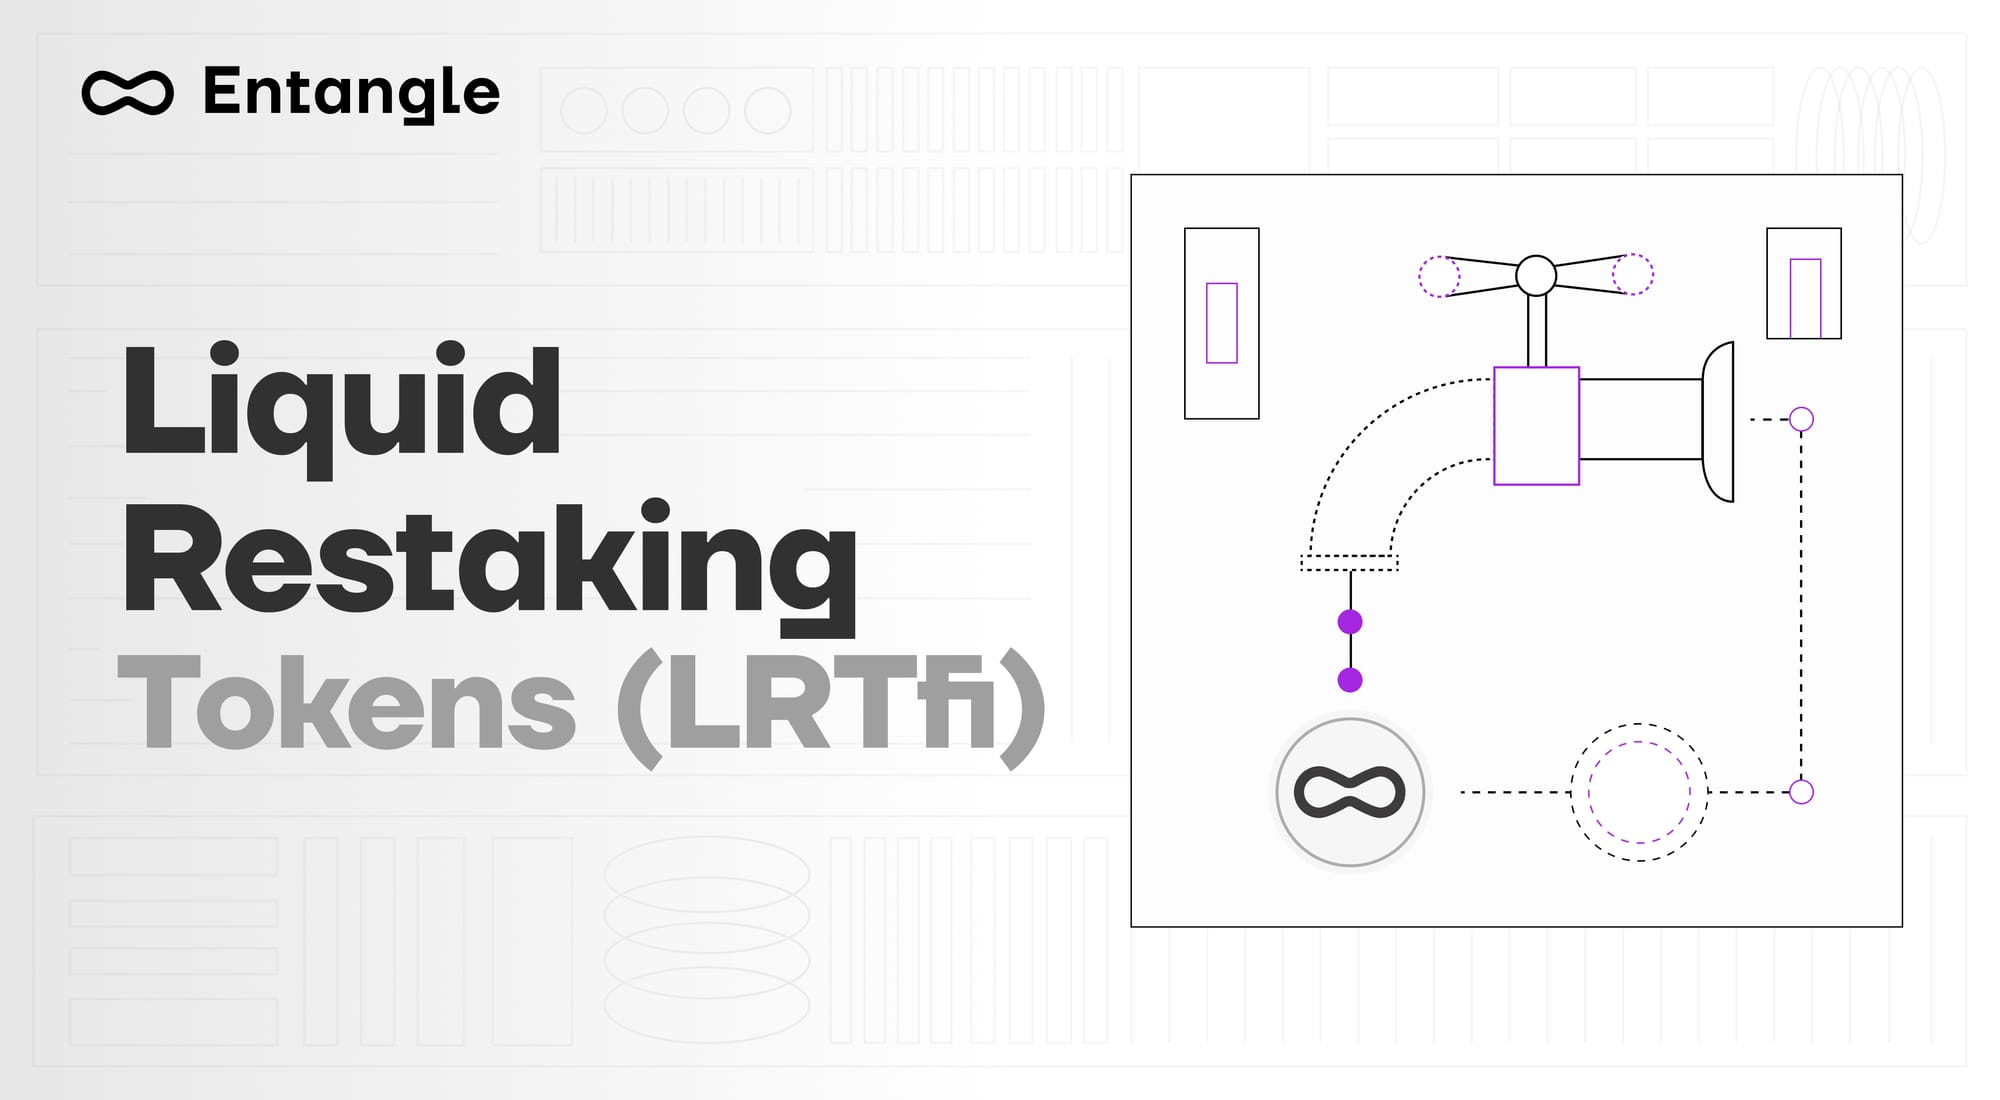 Liquid Restaking Tokens (LRTfi)